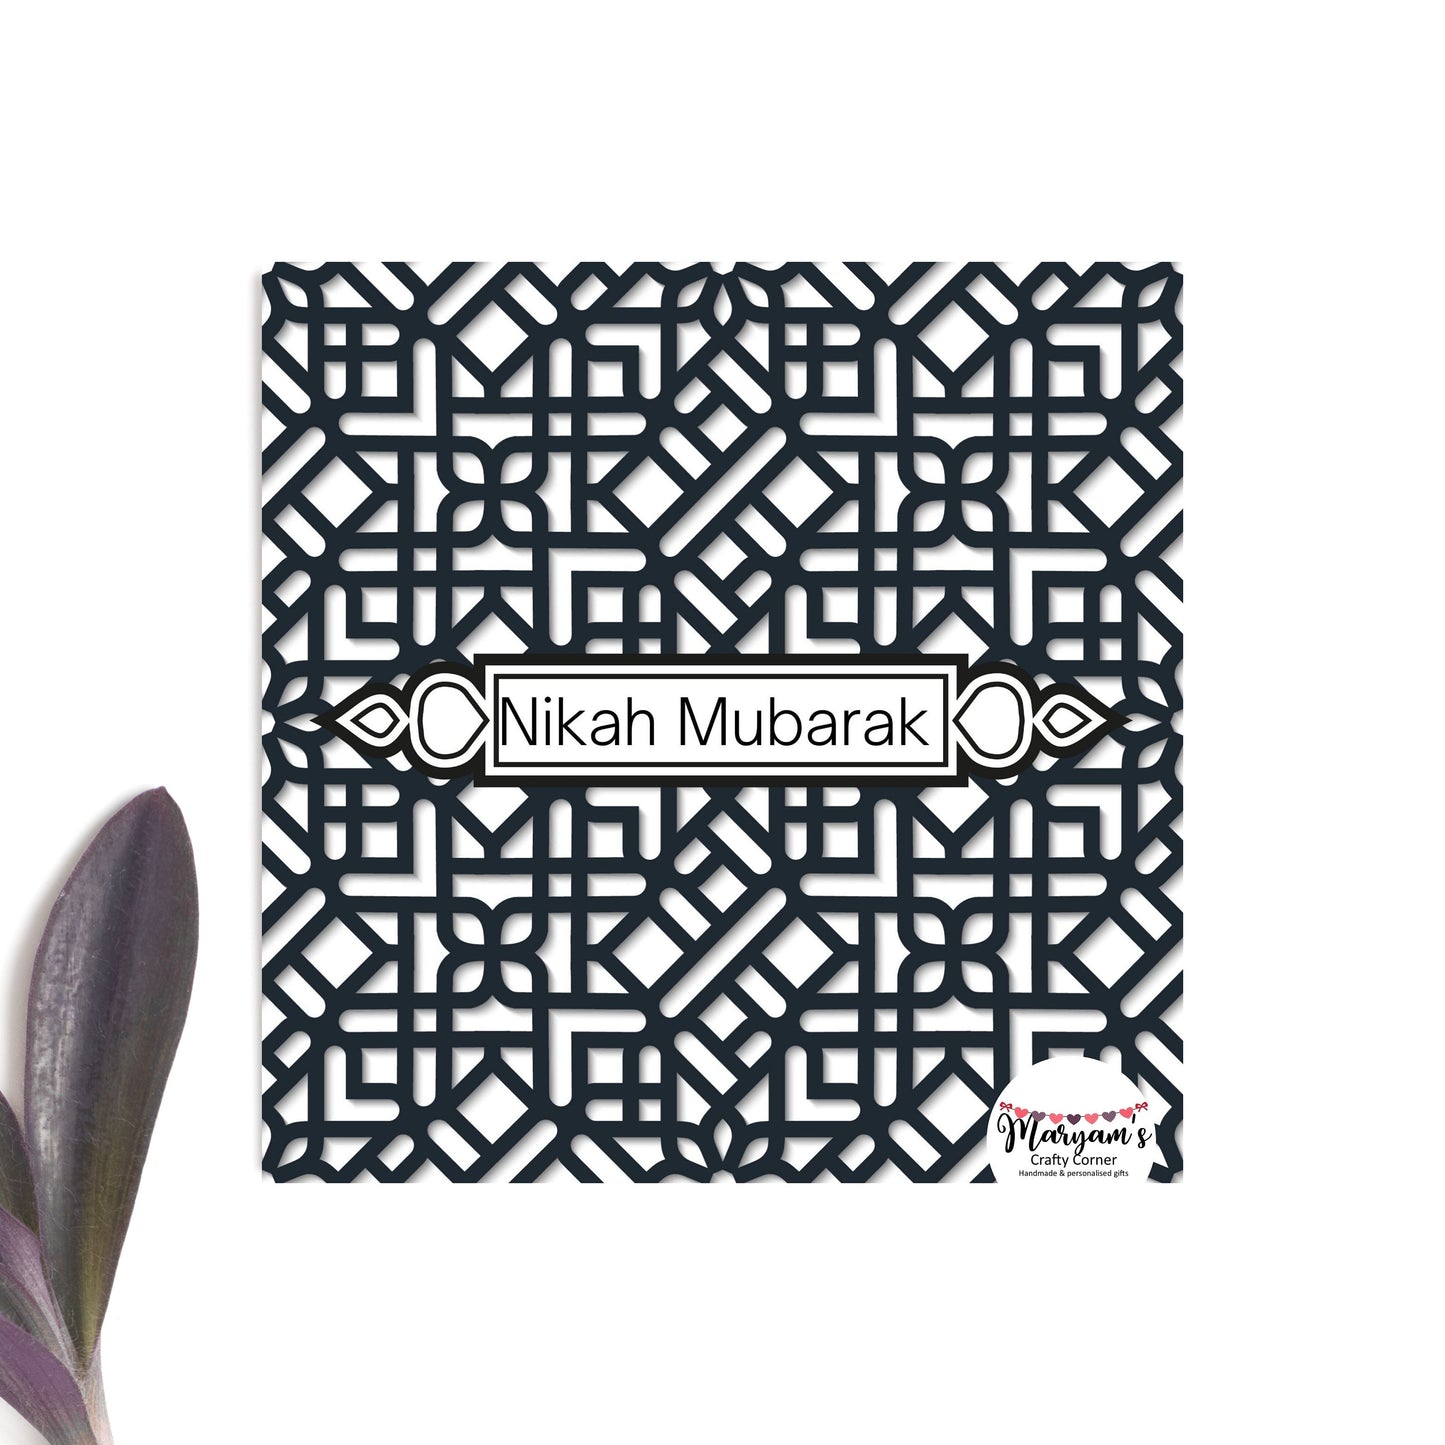 Nikah Mubarak Greeting card, ideal islamic greeting card in Black